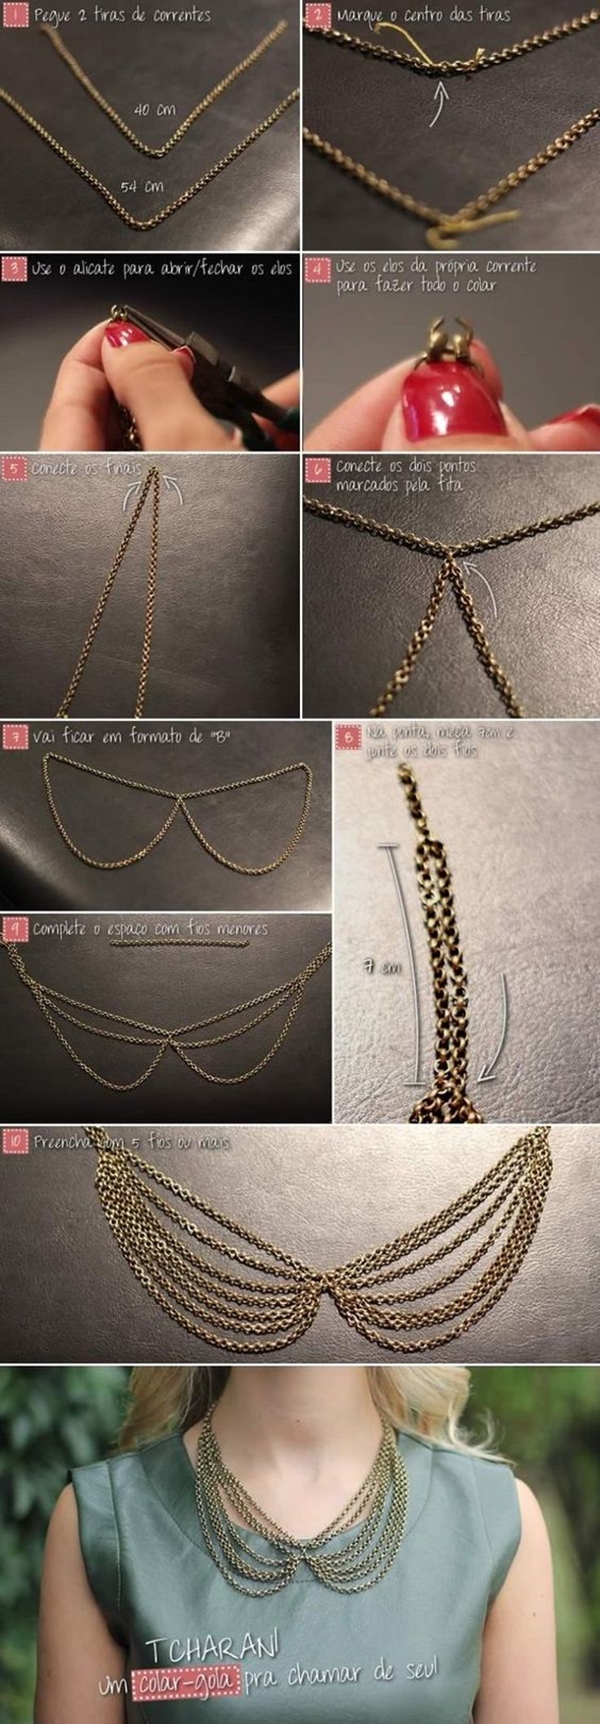 easy-make-diy-jewelry-ideas